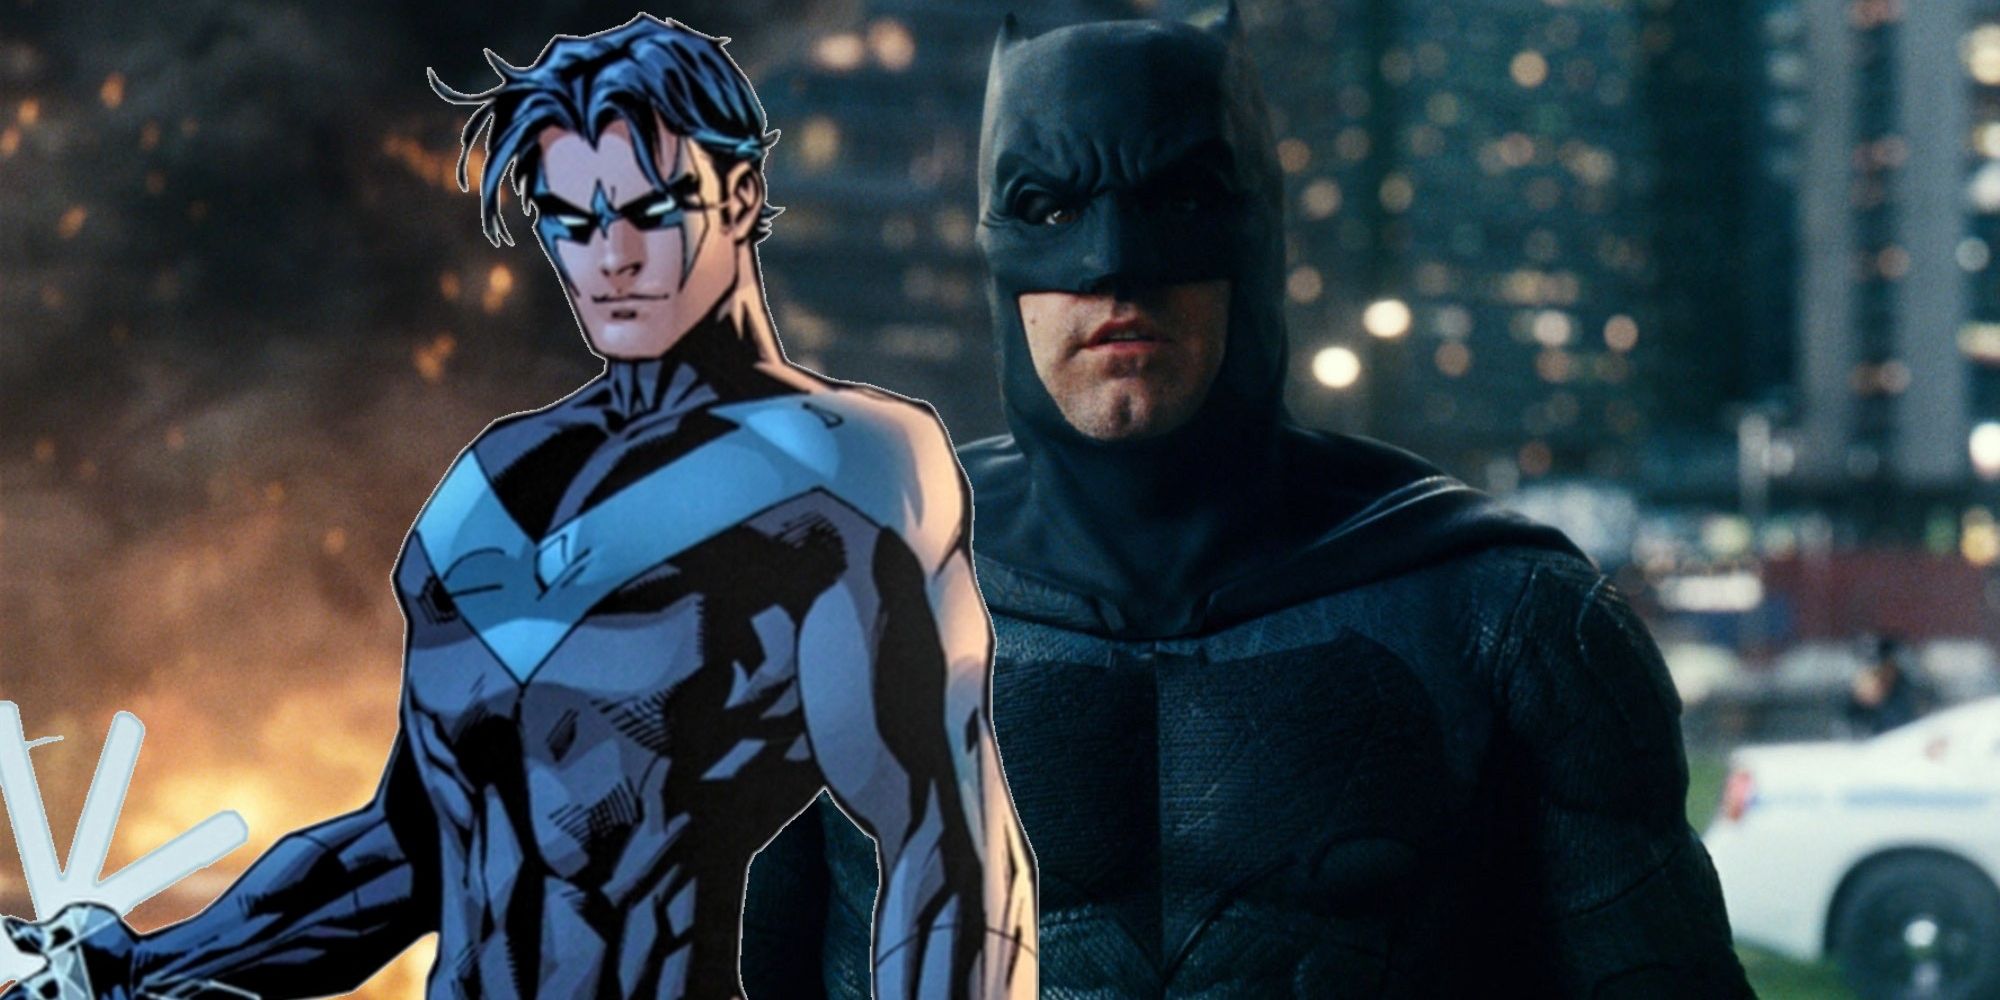 Nightwing and Ben Affleck as Batman